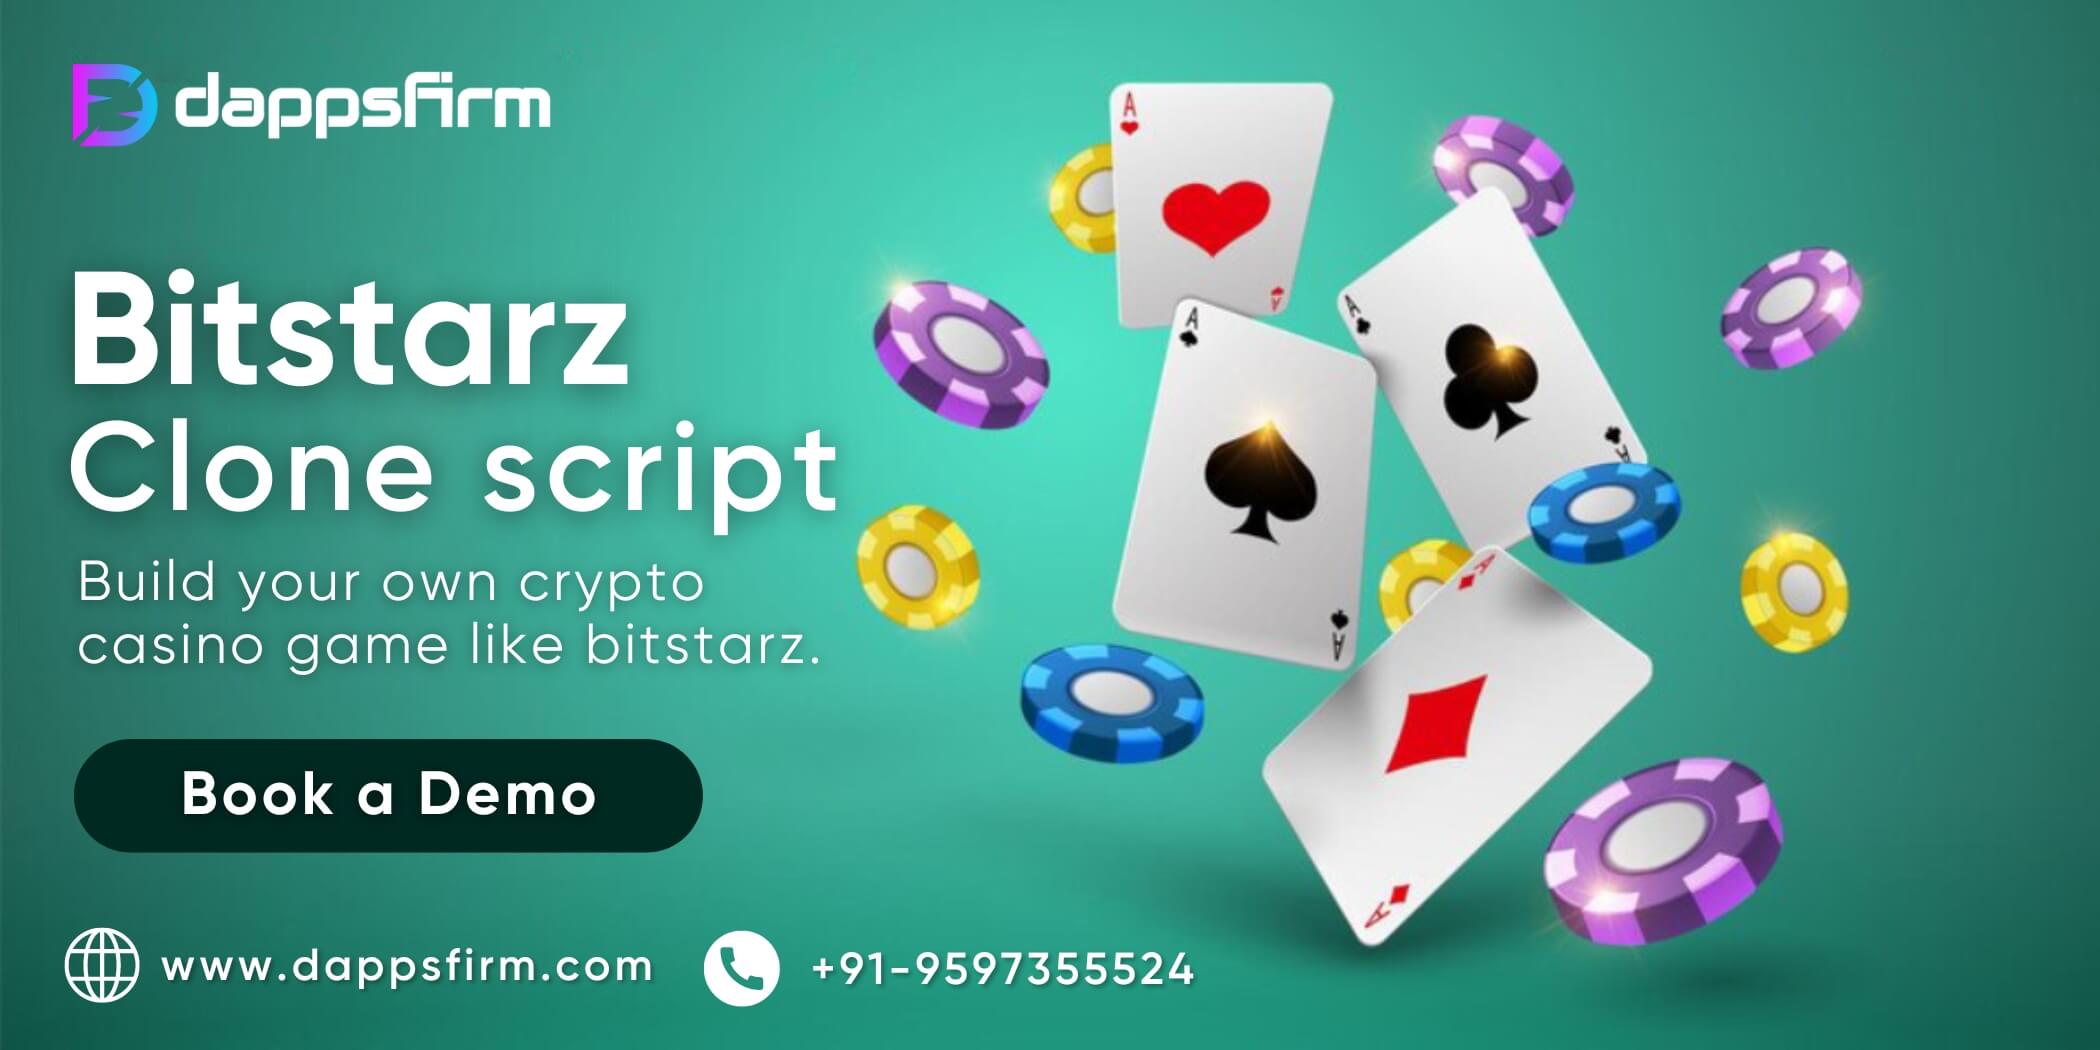 Bitstarz Clone Script To Create Your Own Crypto Casino Game